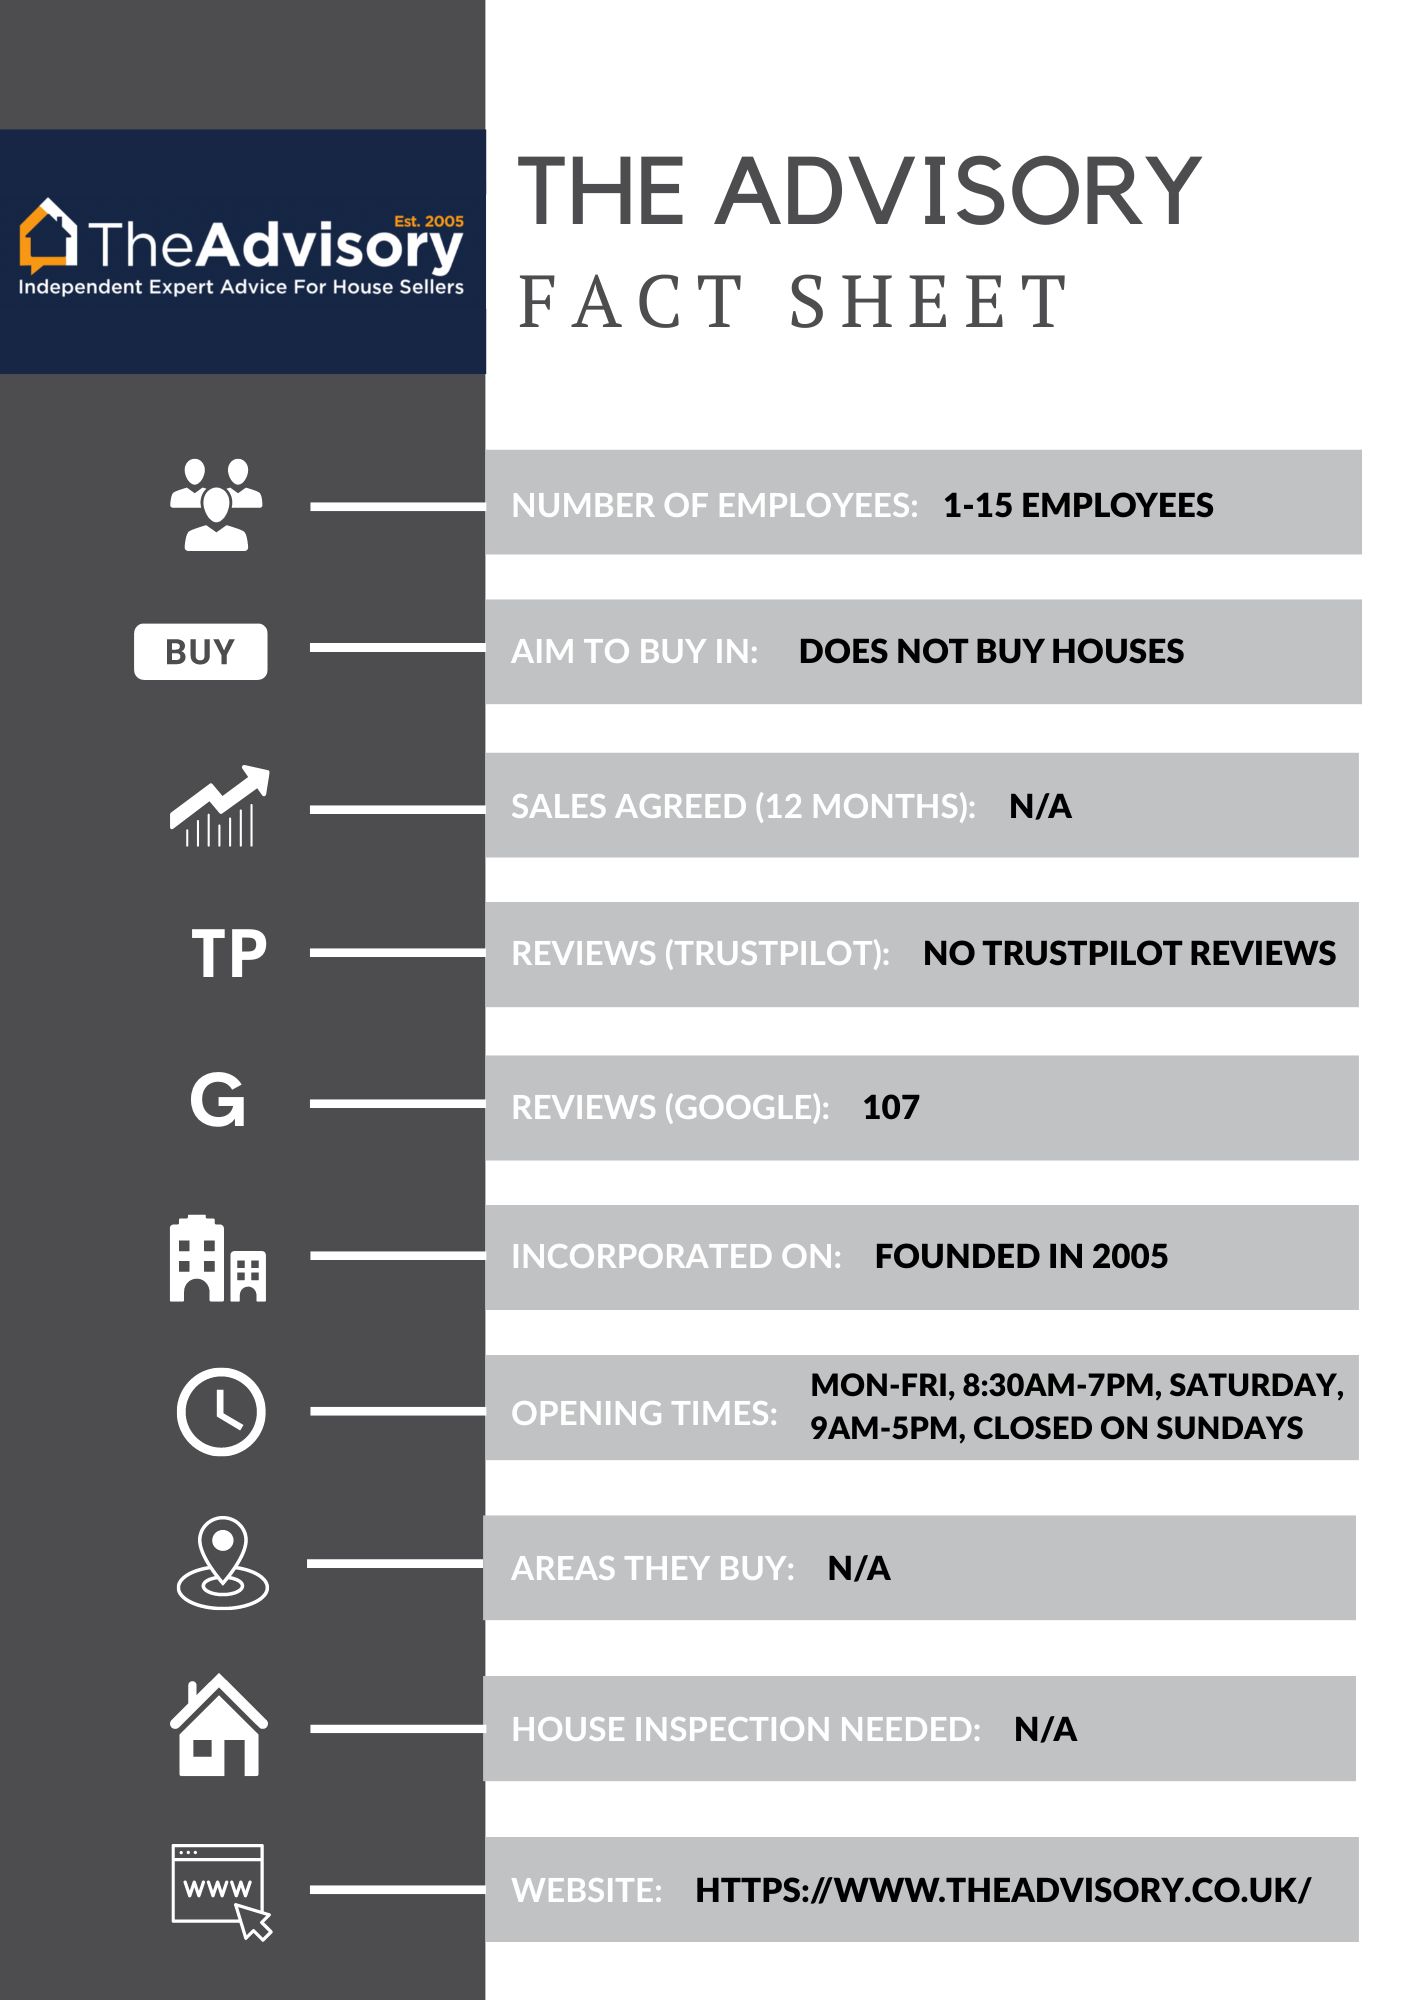 The Advisory house buyer fact sheet